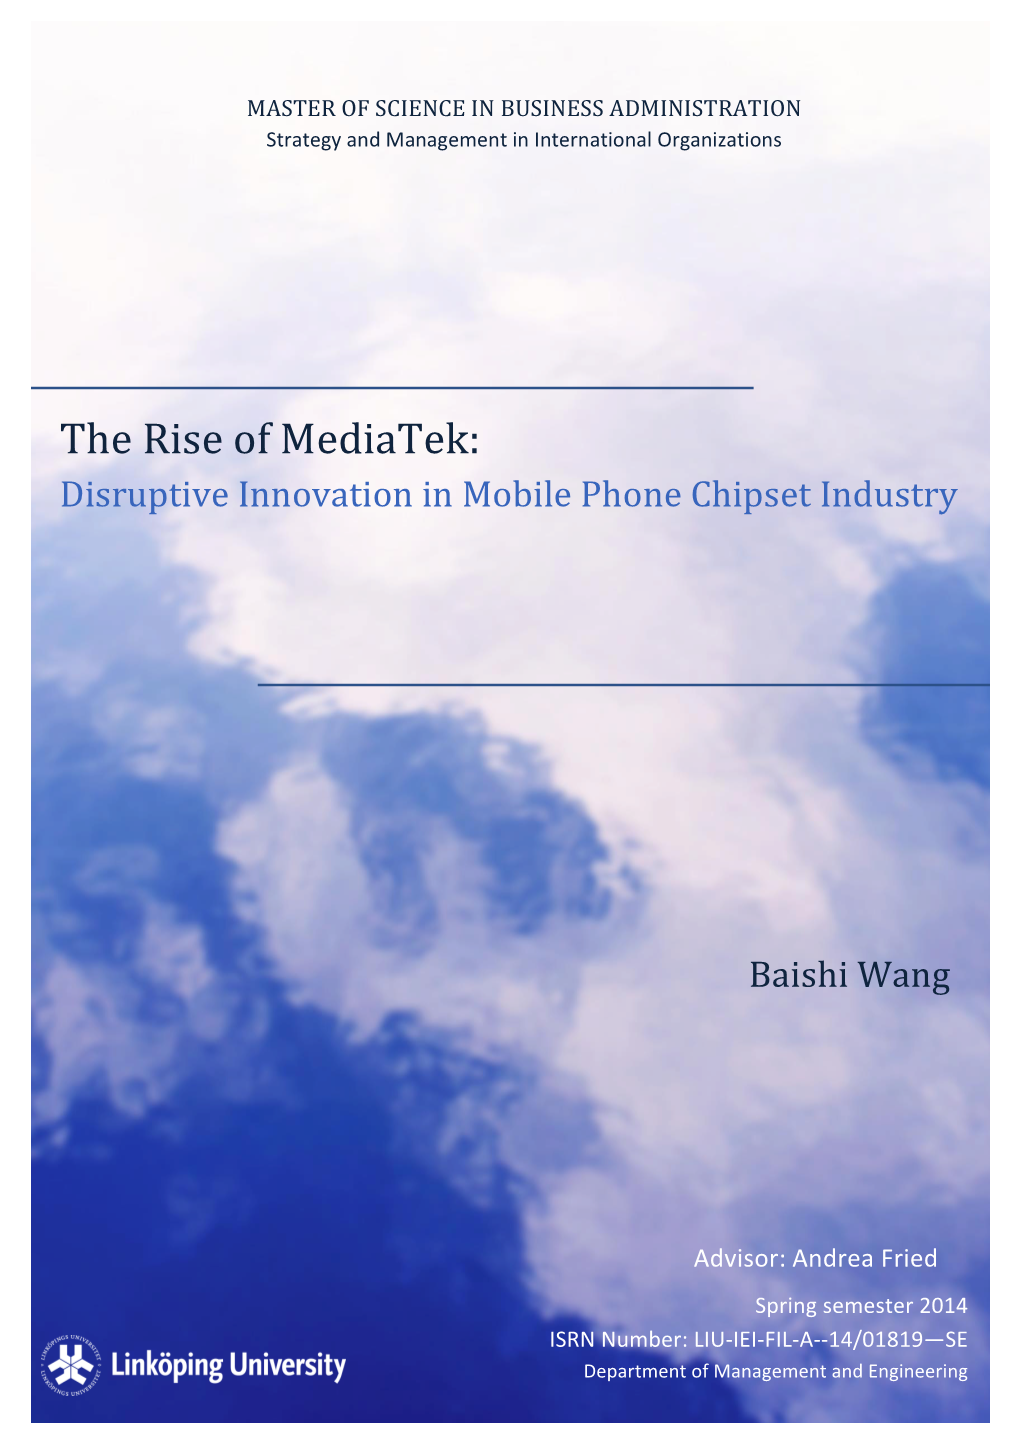 The Rise of Mediatek: Disruptive Innovation in Mobile Phone Chipset Industry